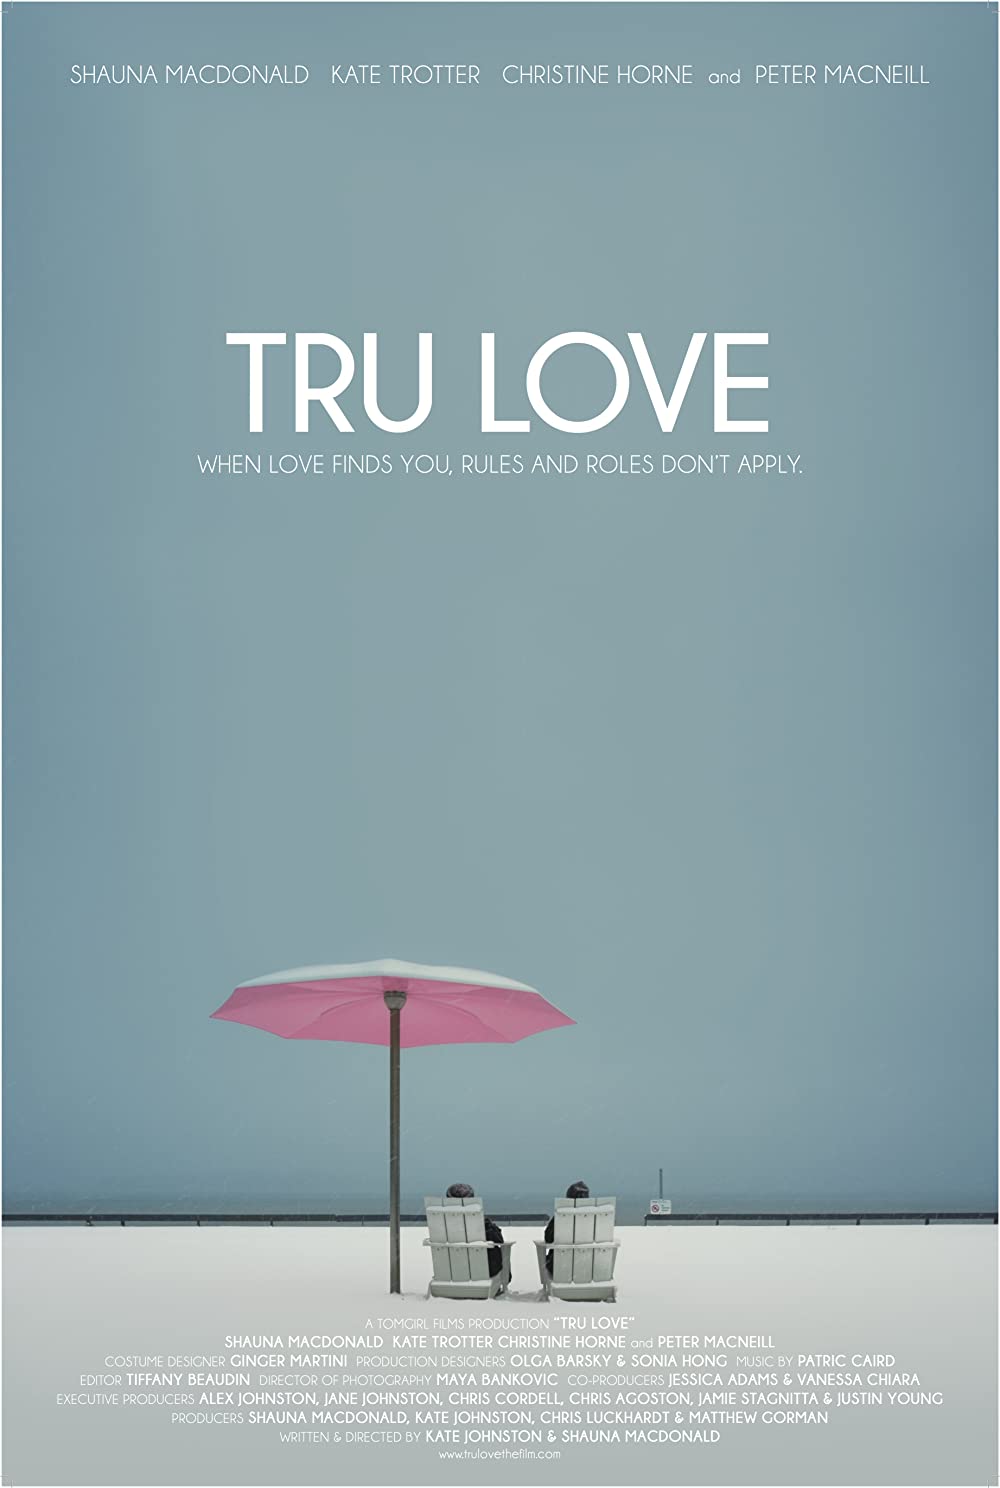 Filmbeschreibung zu Tru Love